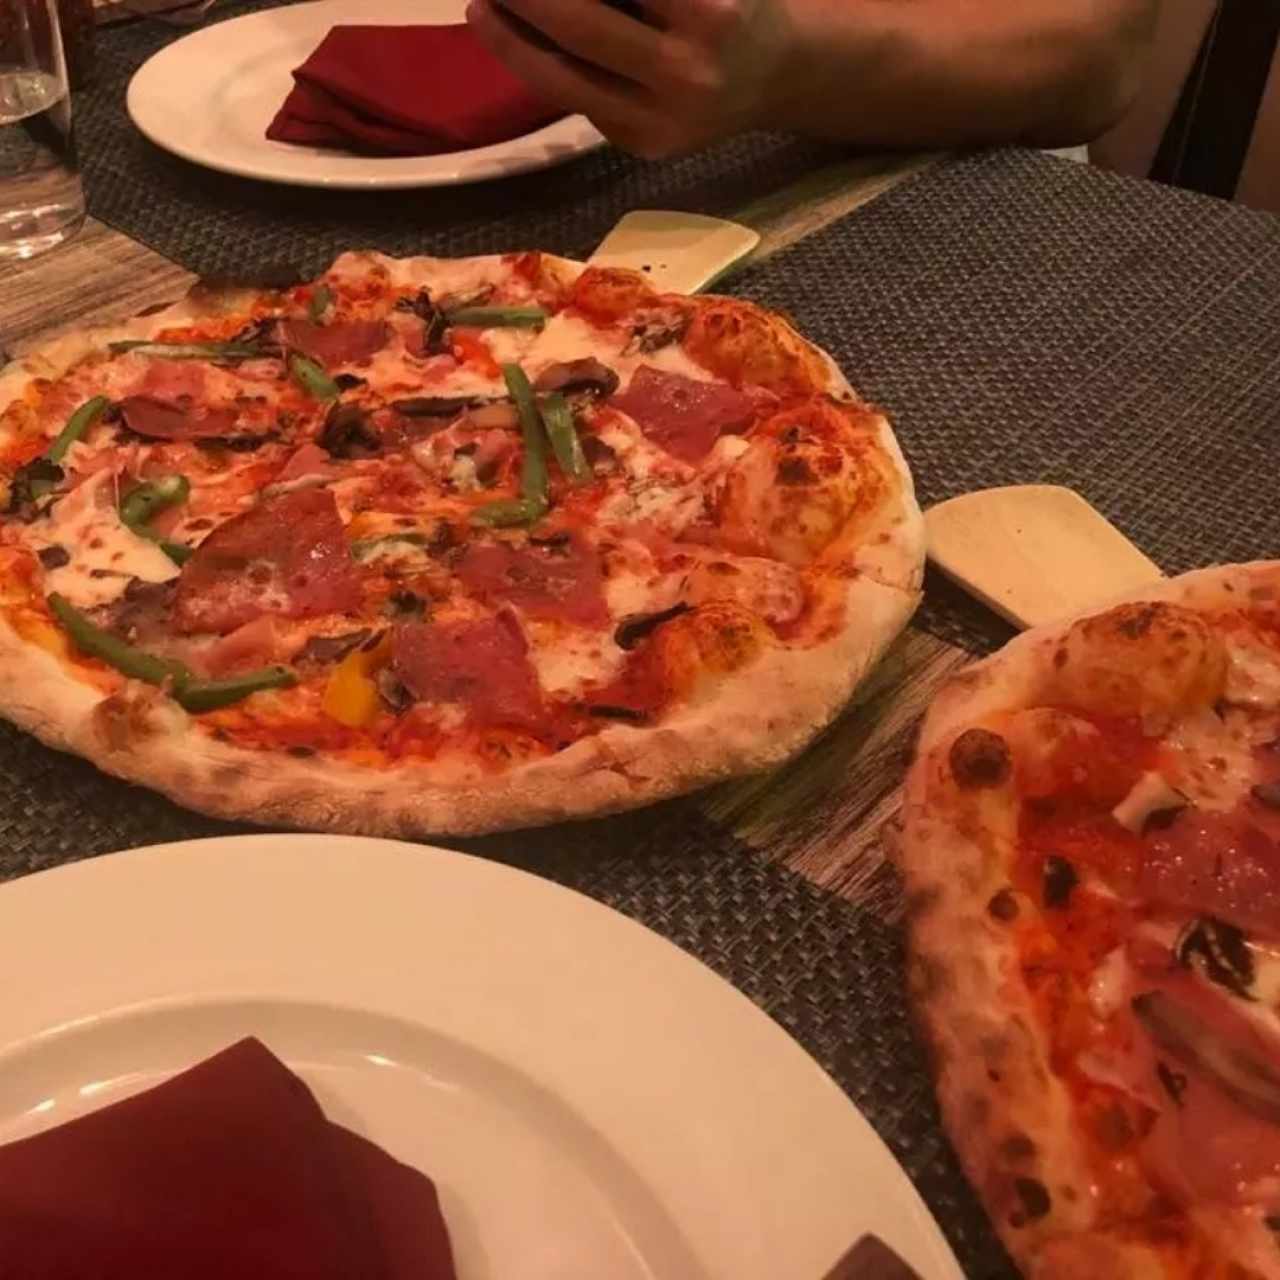 more pizza